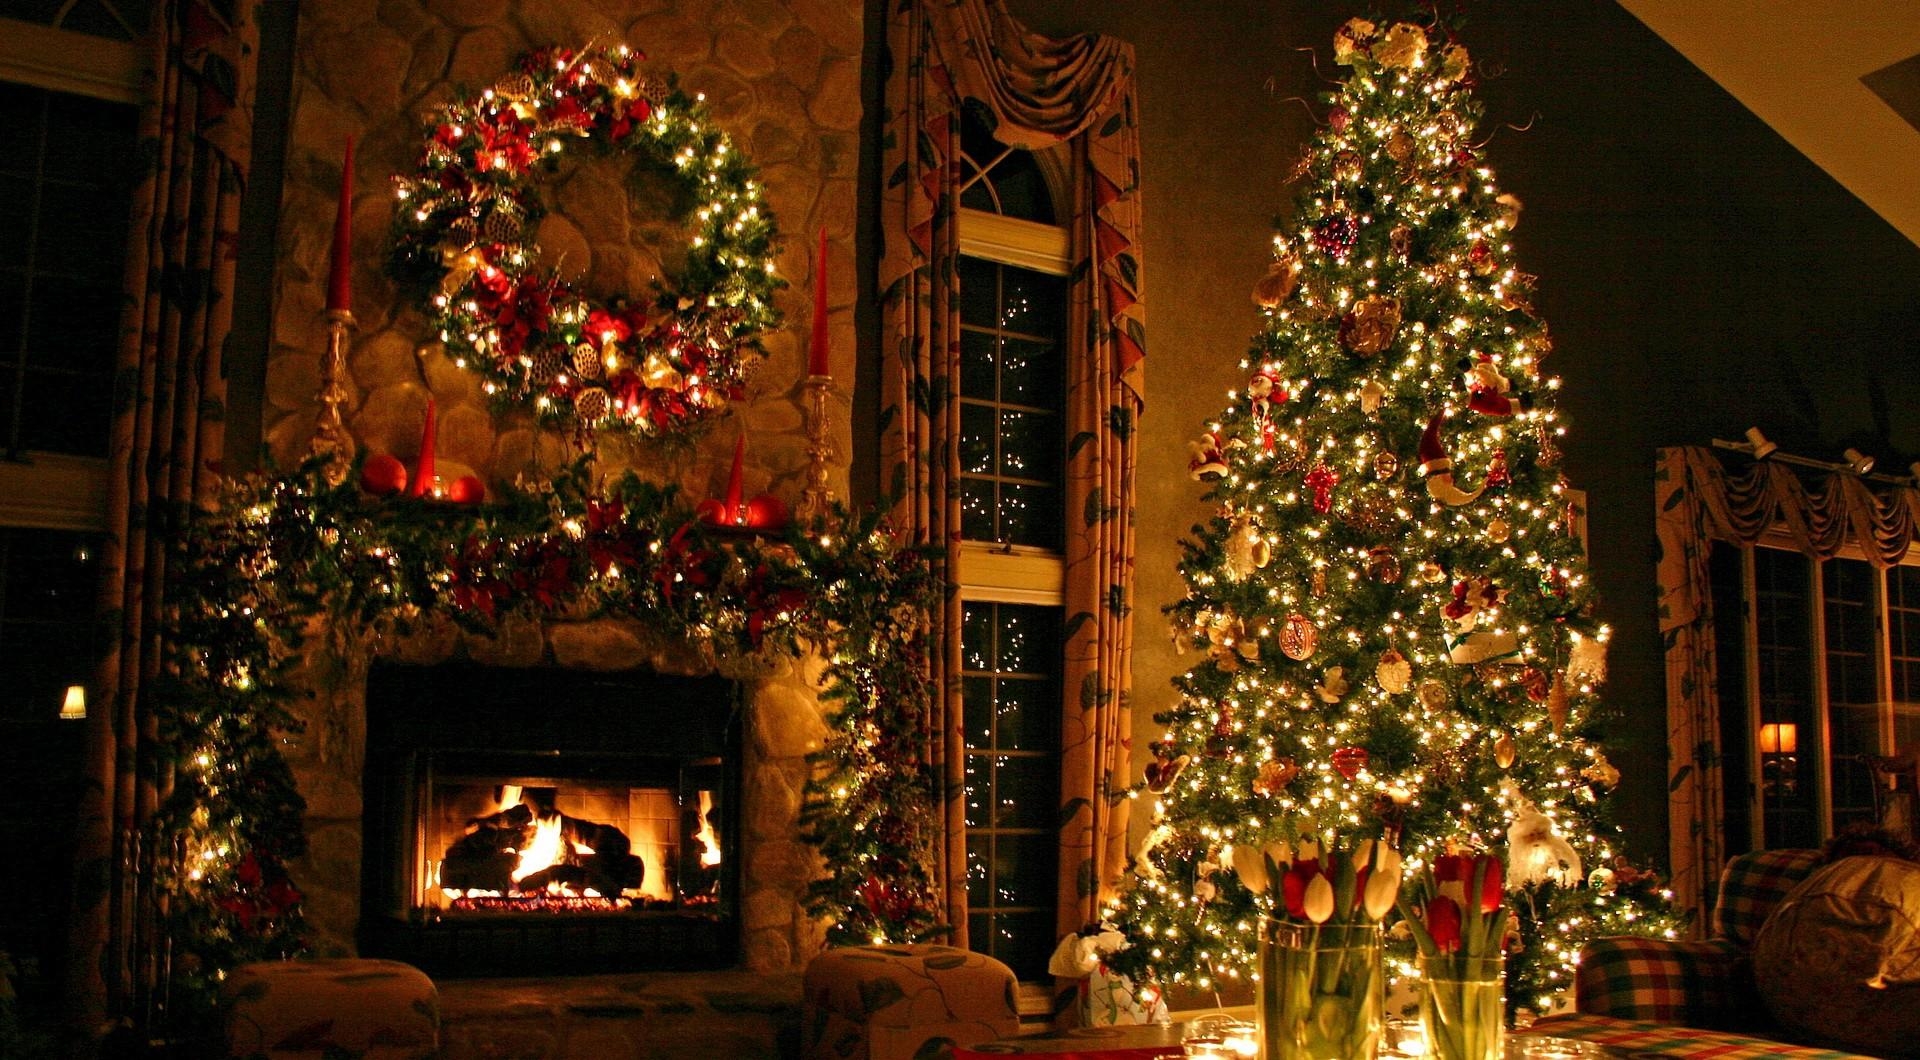 holidays, flowers, decorations, holiday, house, christmas decorations, christmas tree toys, christmas tree, coziness, comfort, fireplace